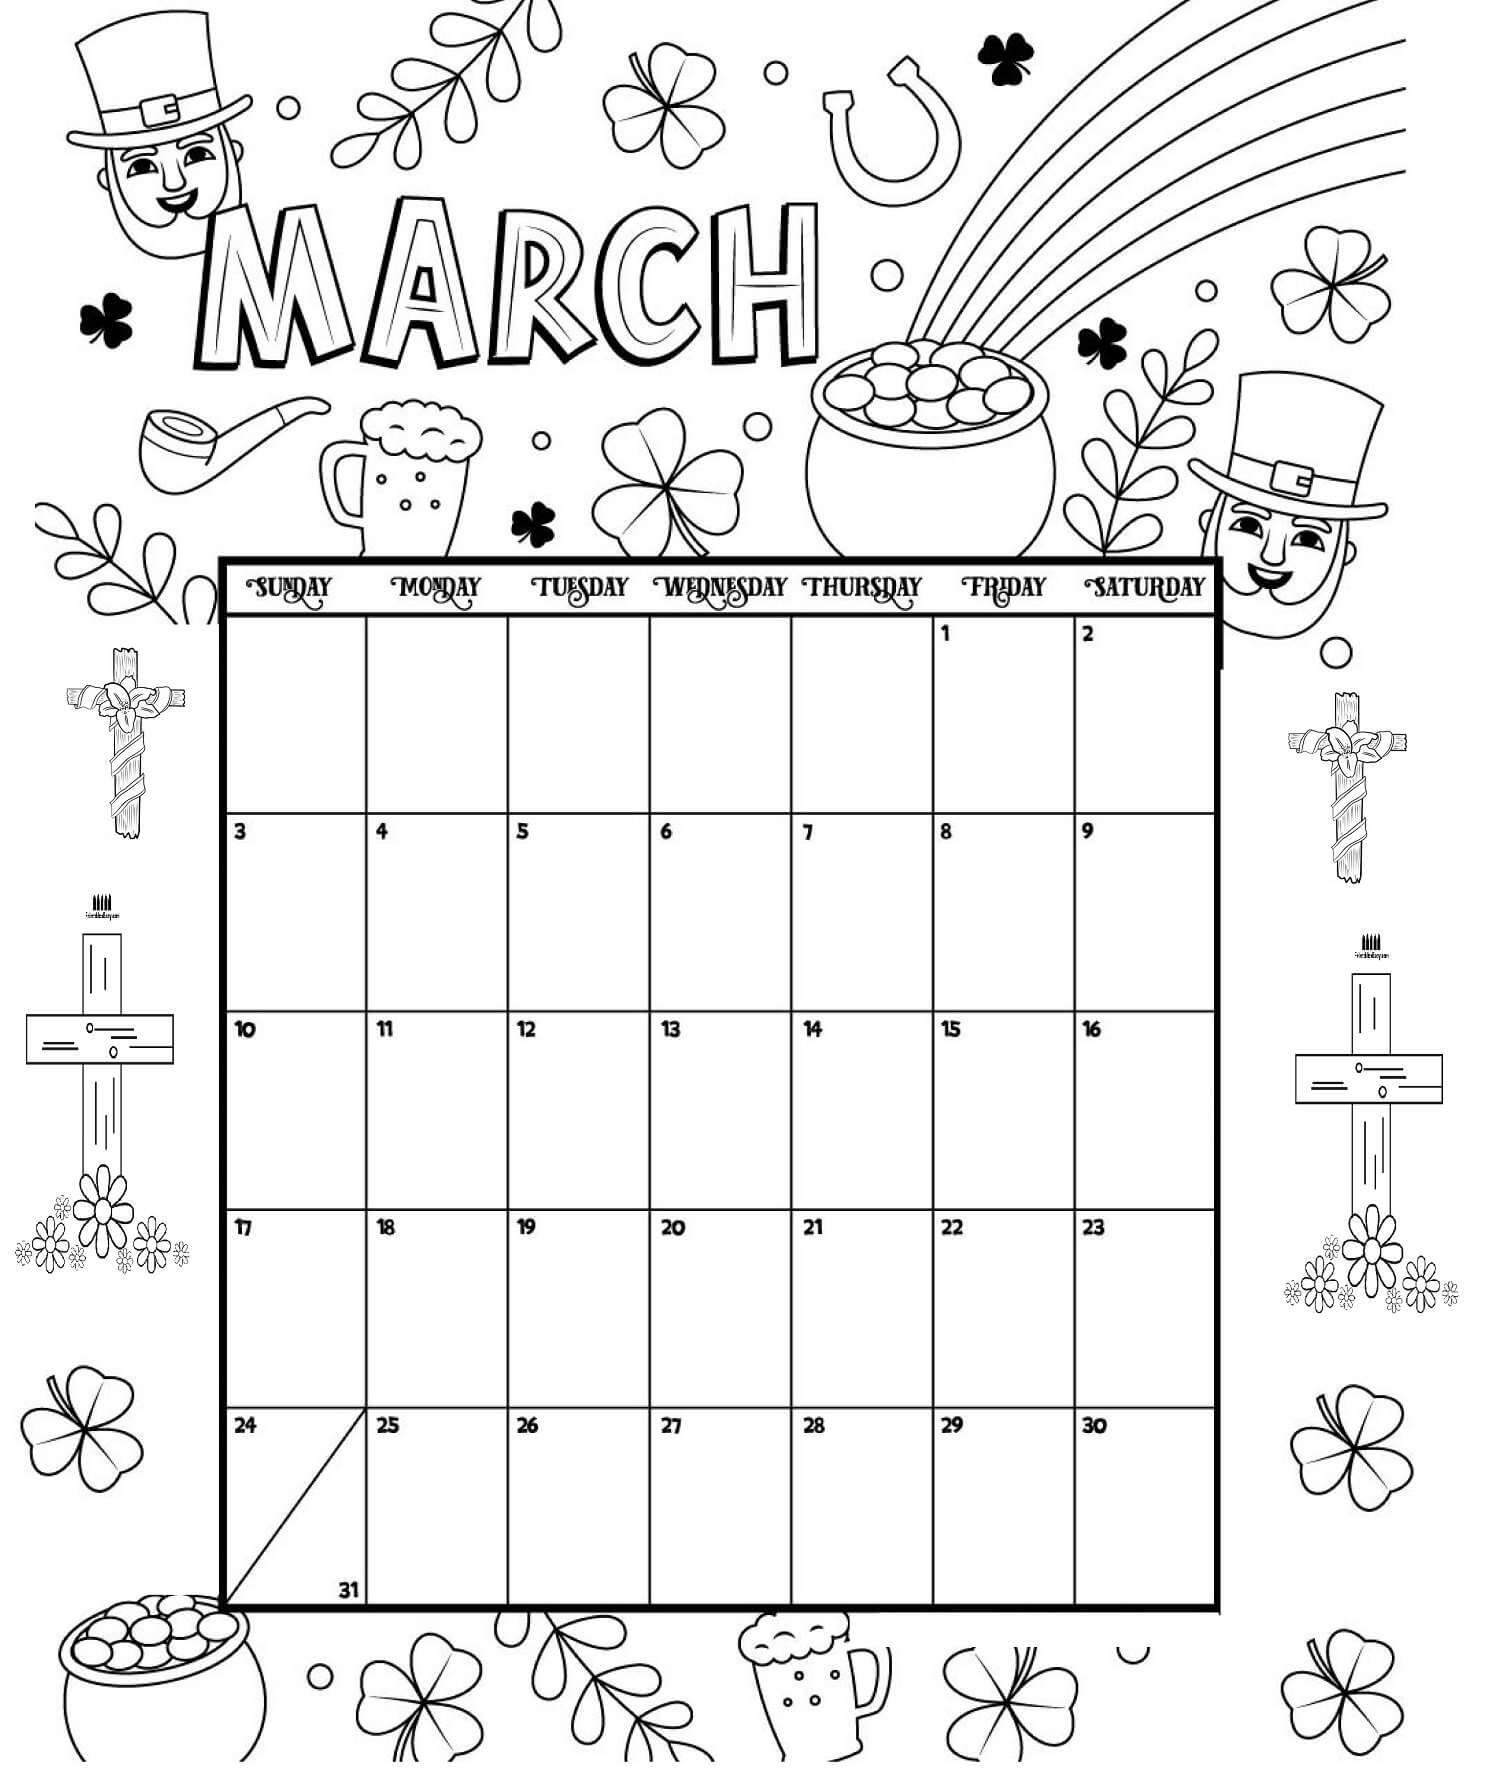 March Coloring Calendar 2019